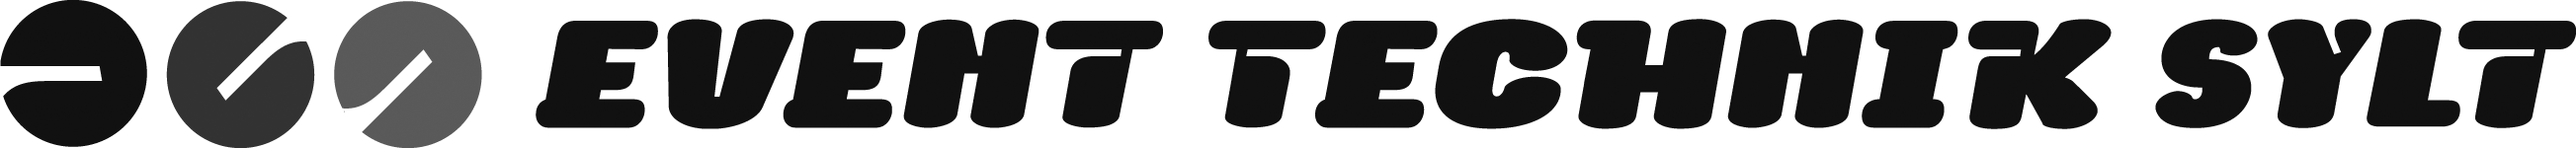 Eventtechnik Sylt Logo Lang